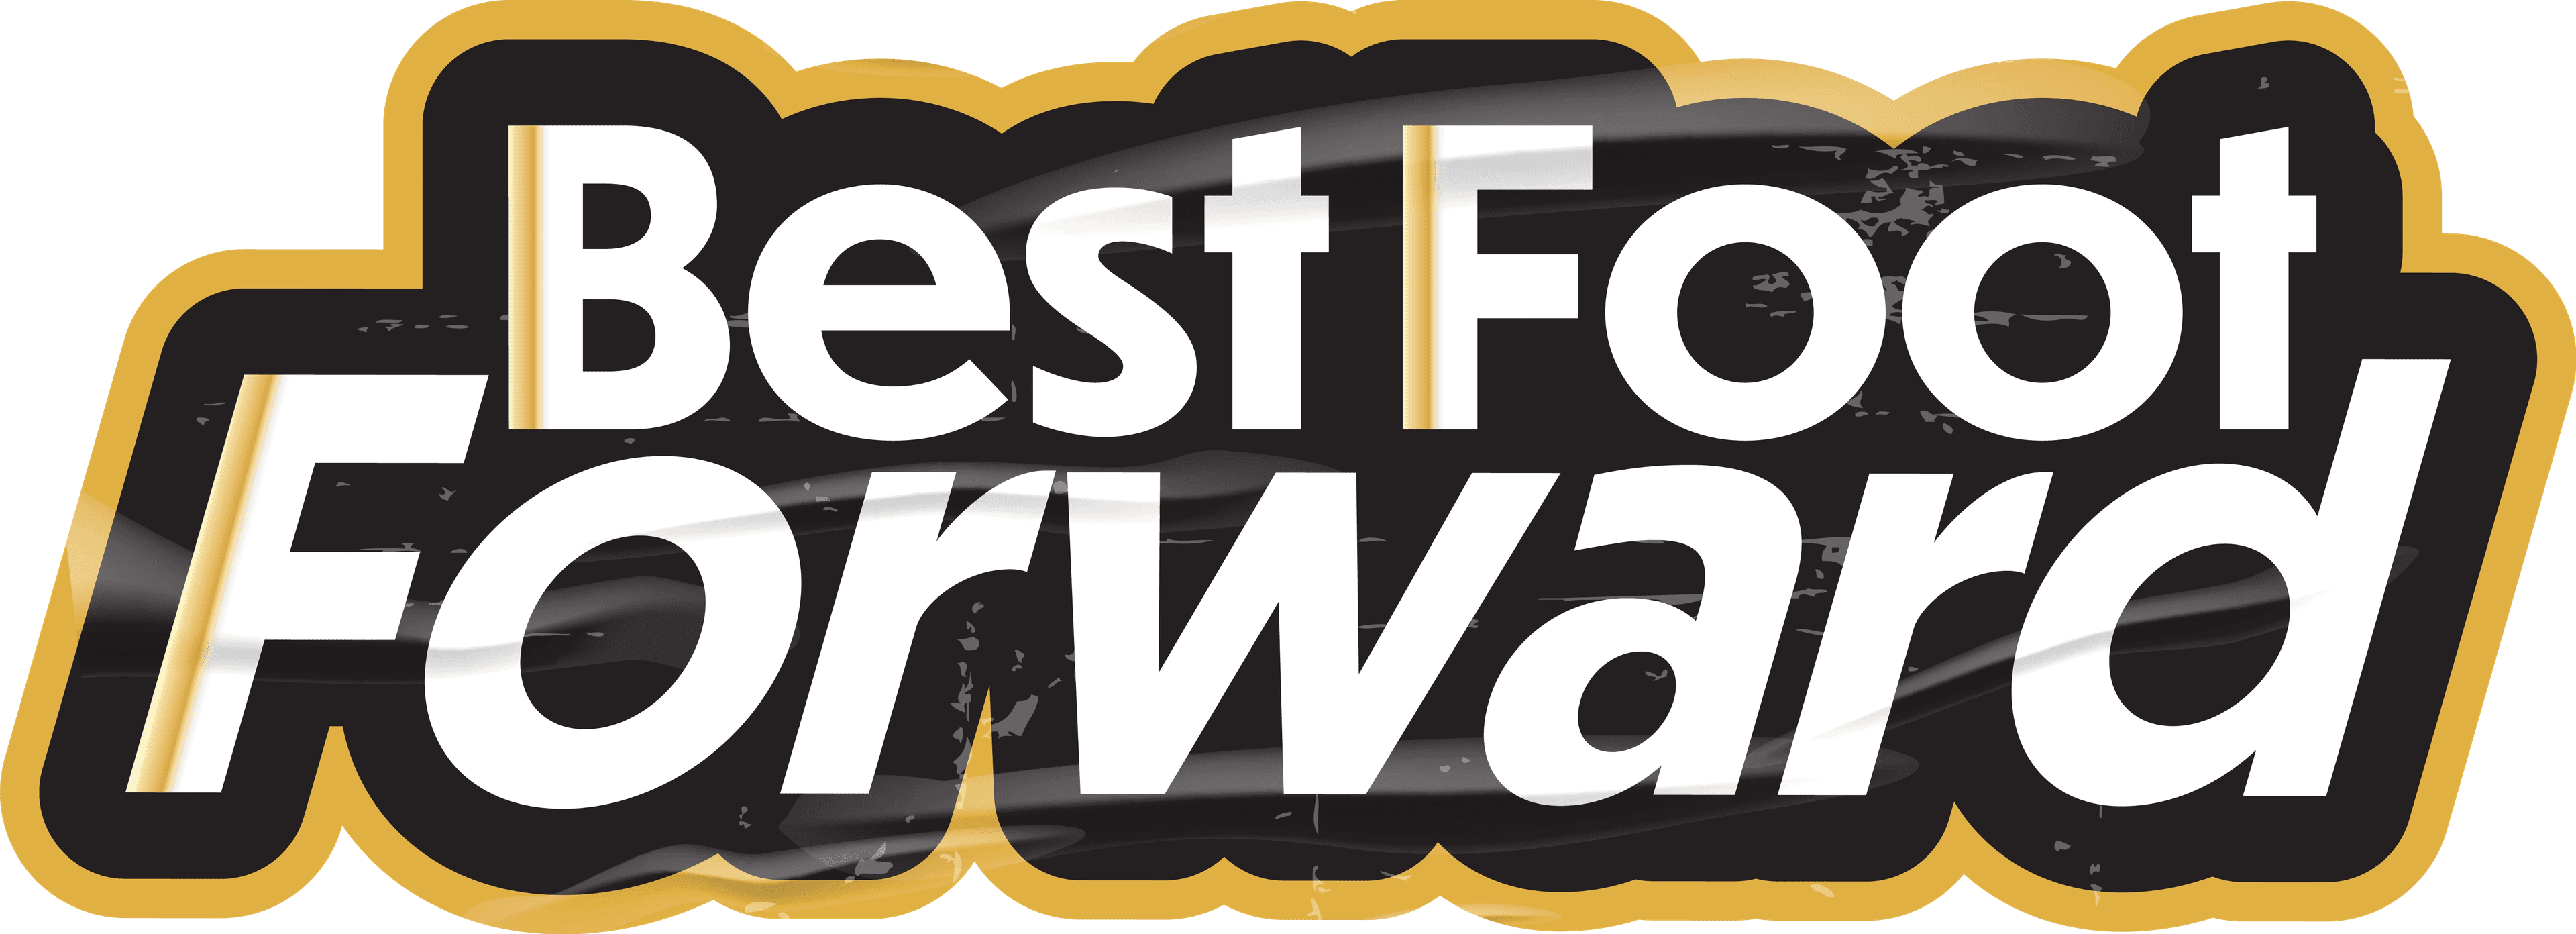 Best Foot Forward logo